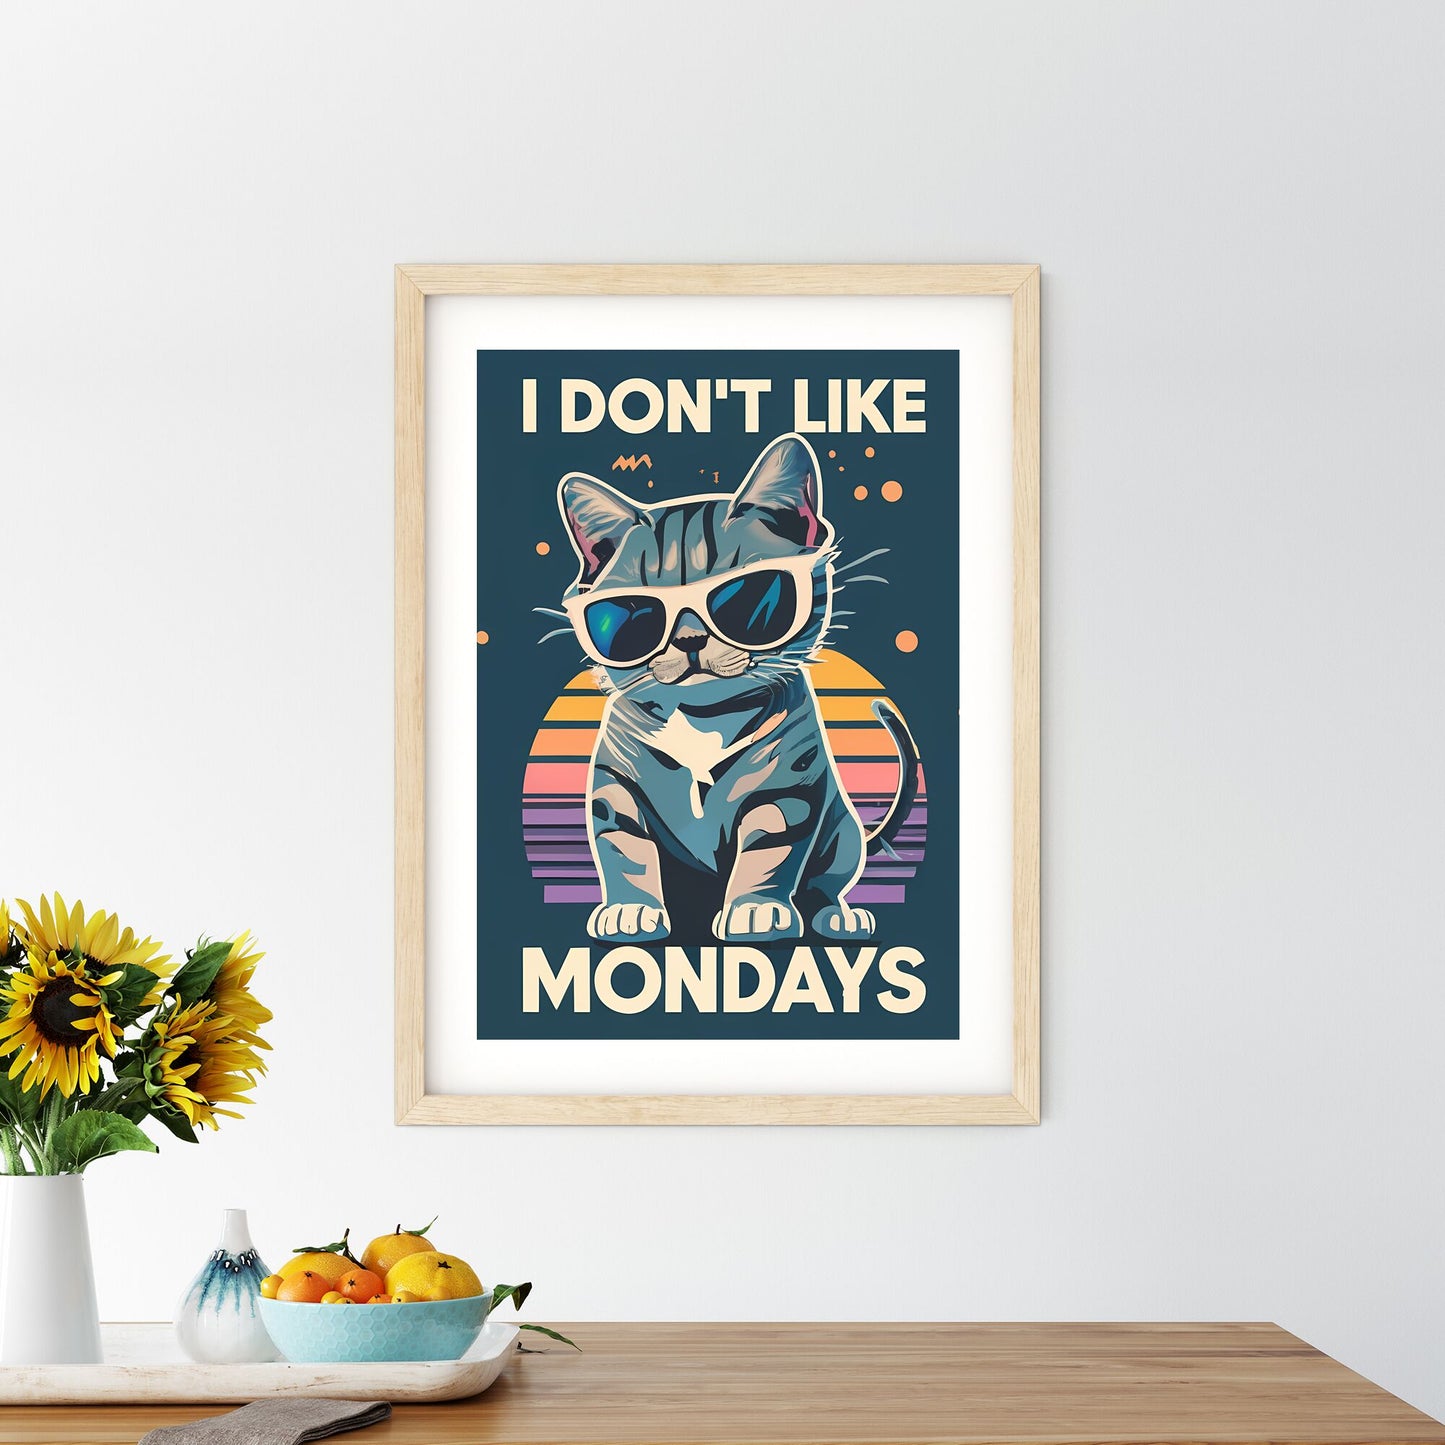 I Dont Like Mondays - A Cat Wearing Sunglasses And A Sunset Art Print Default Title